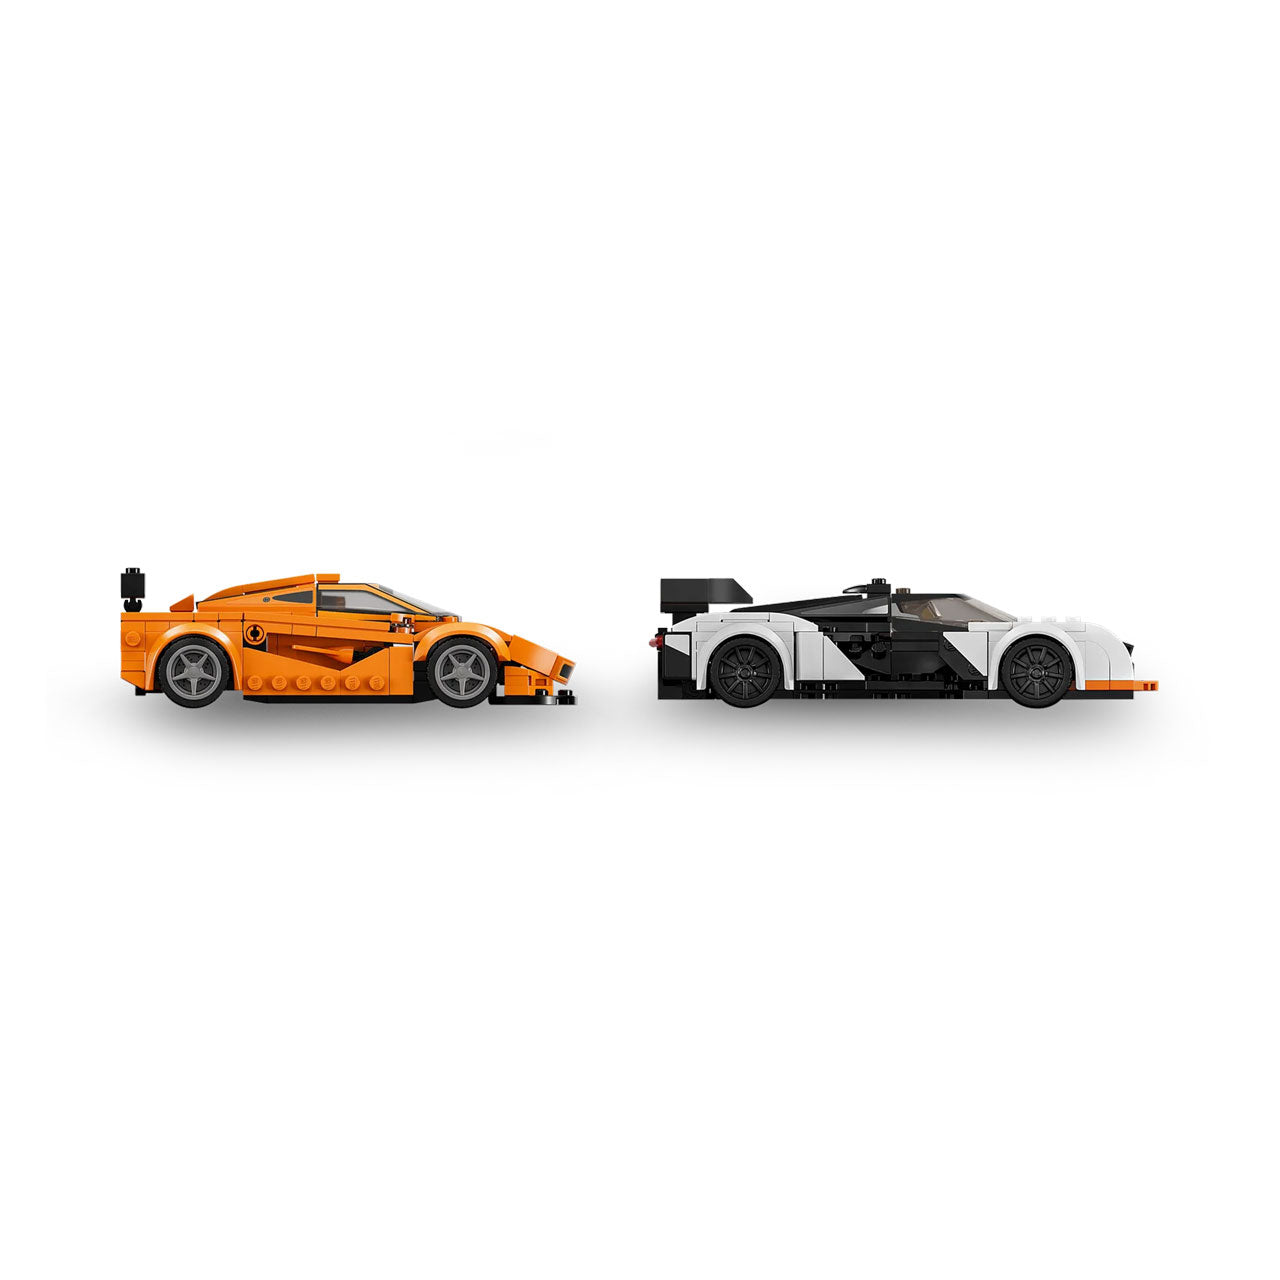 LEGO McLaren Solus GT & McLaren F1 LM Set 76918 Instructions